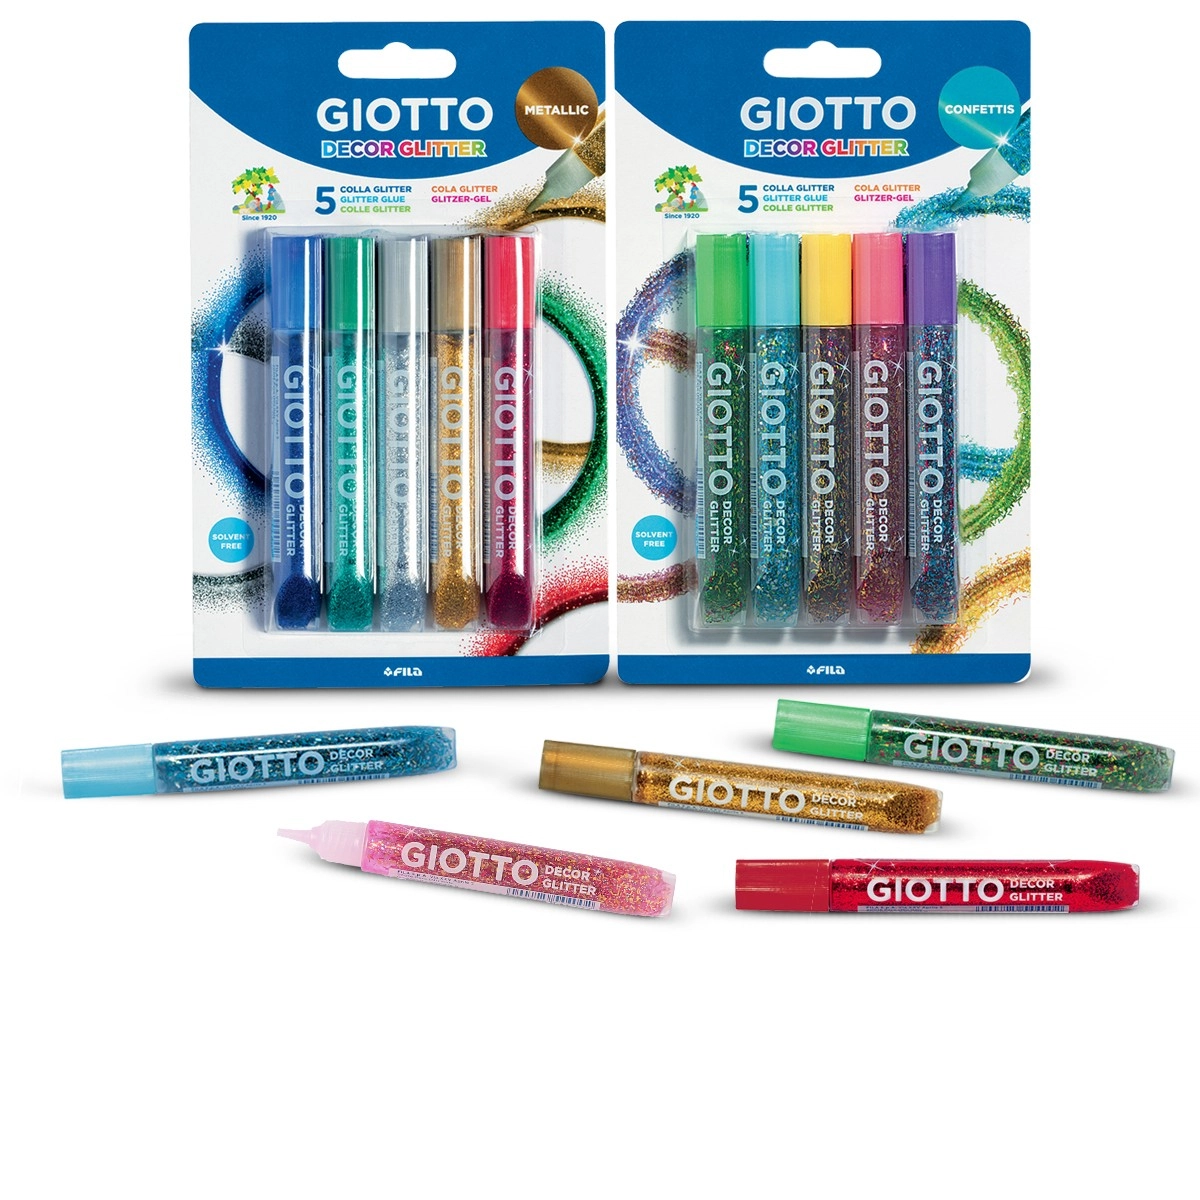 Crayon paillette - 6 Glitter Glue